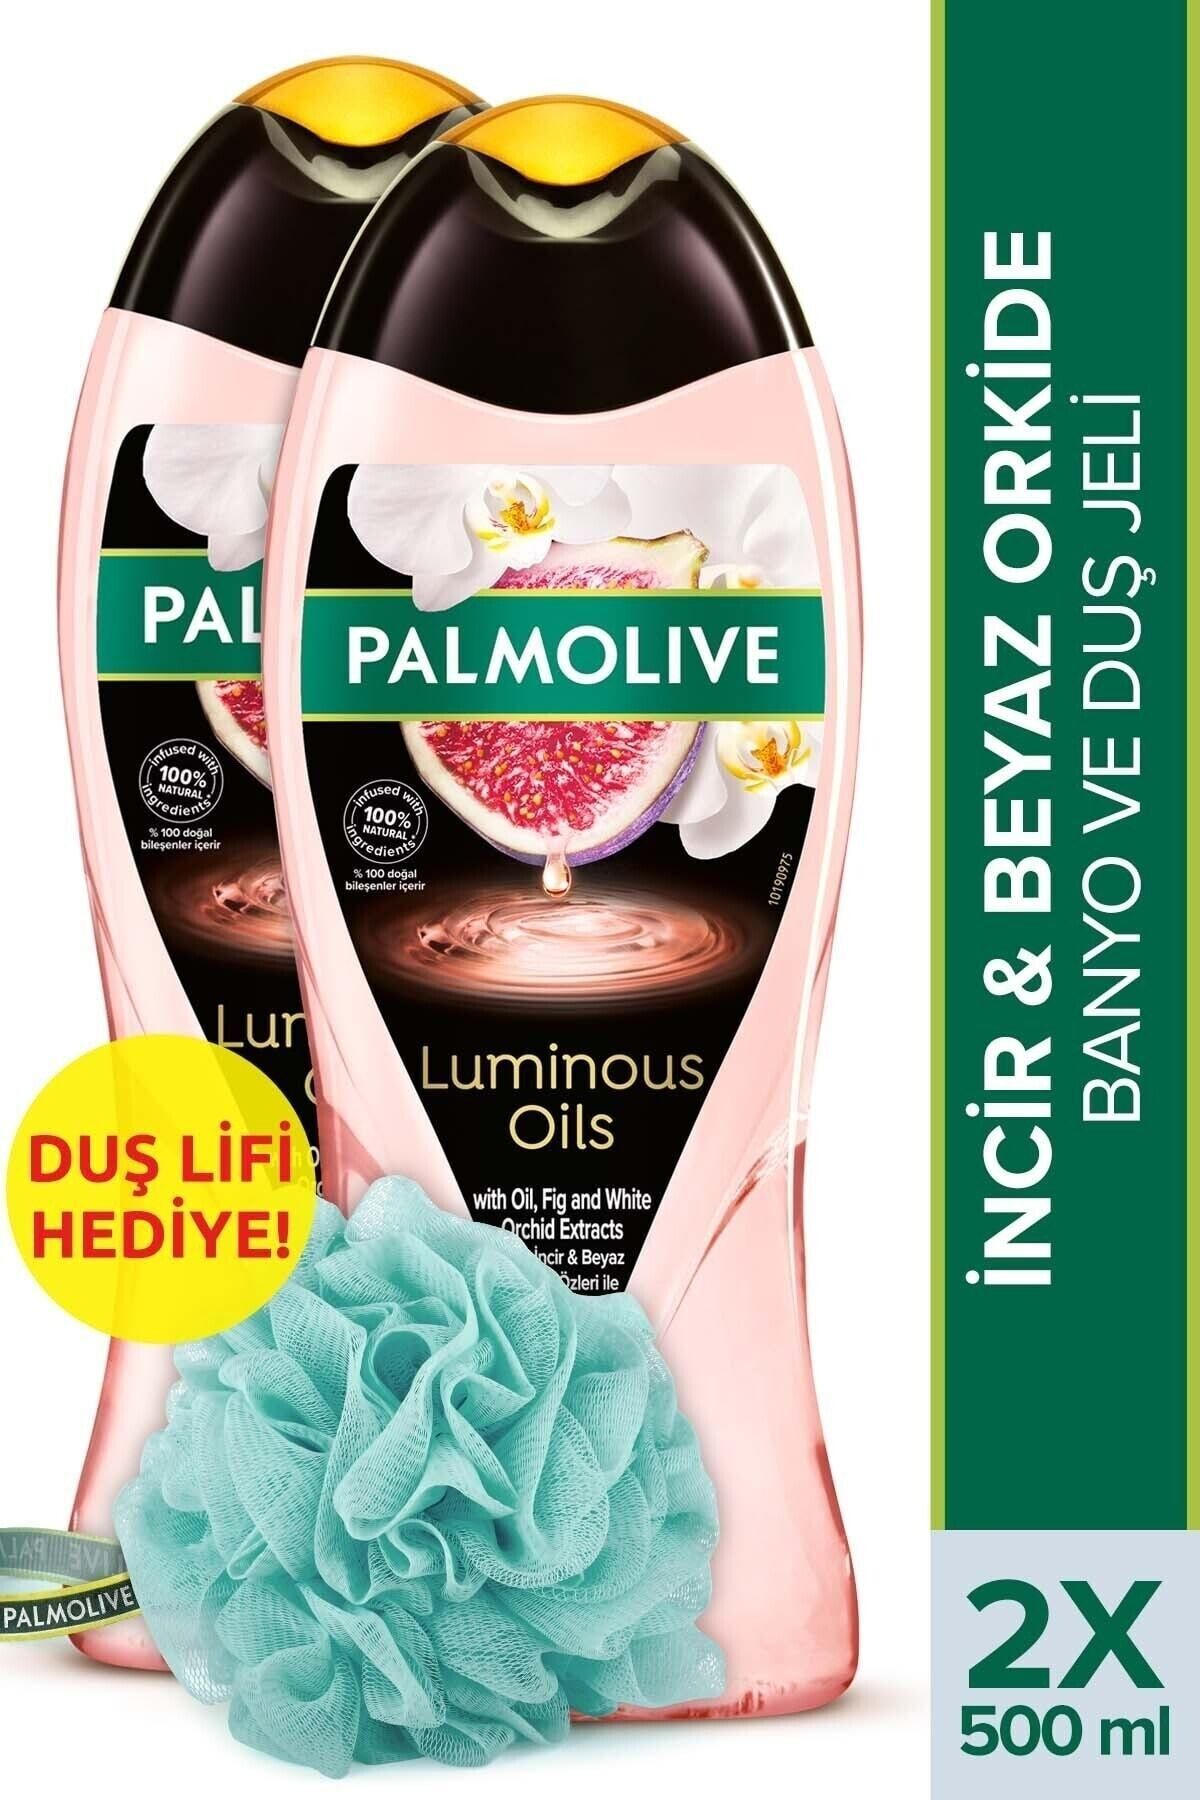 Palmolive Luminous Oils Banyo ve Duş Jeli 500 ml x 2 Adet + Duş Lifi Hediye